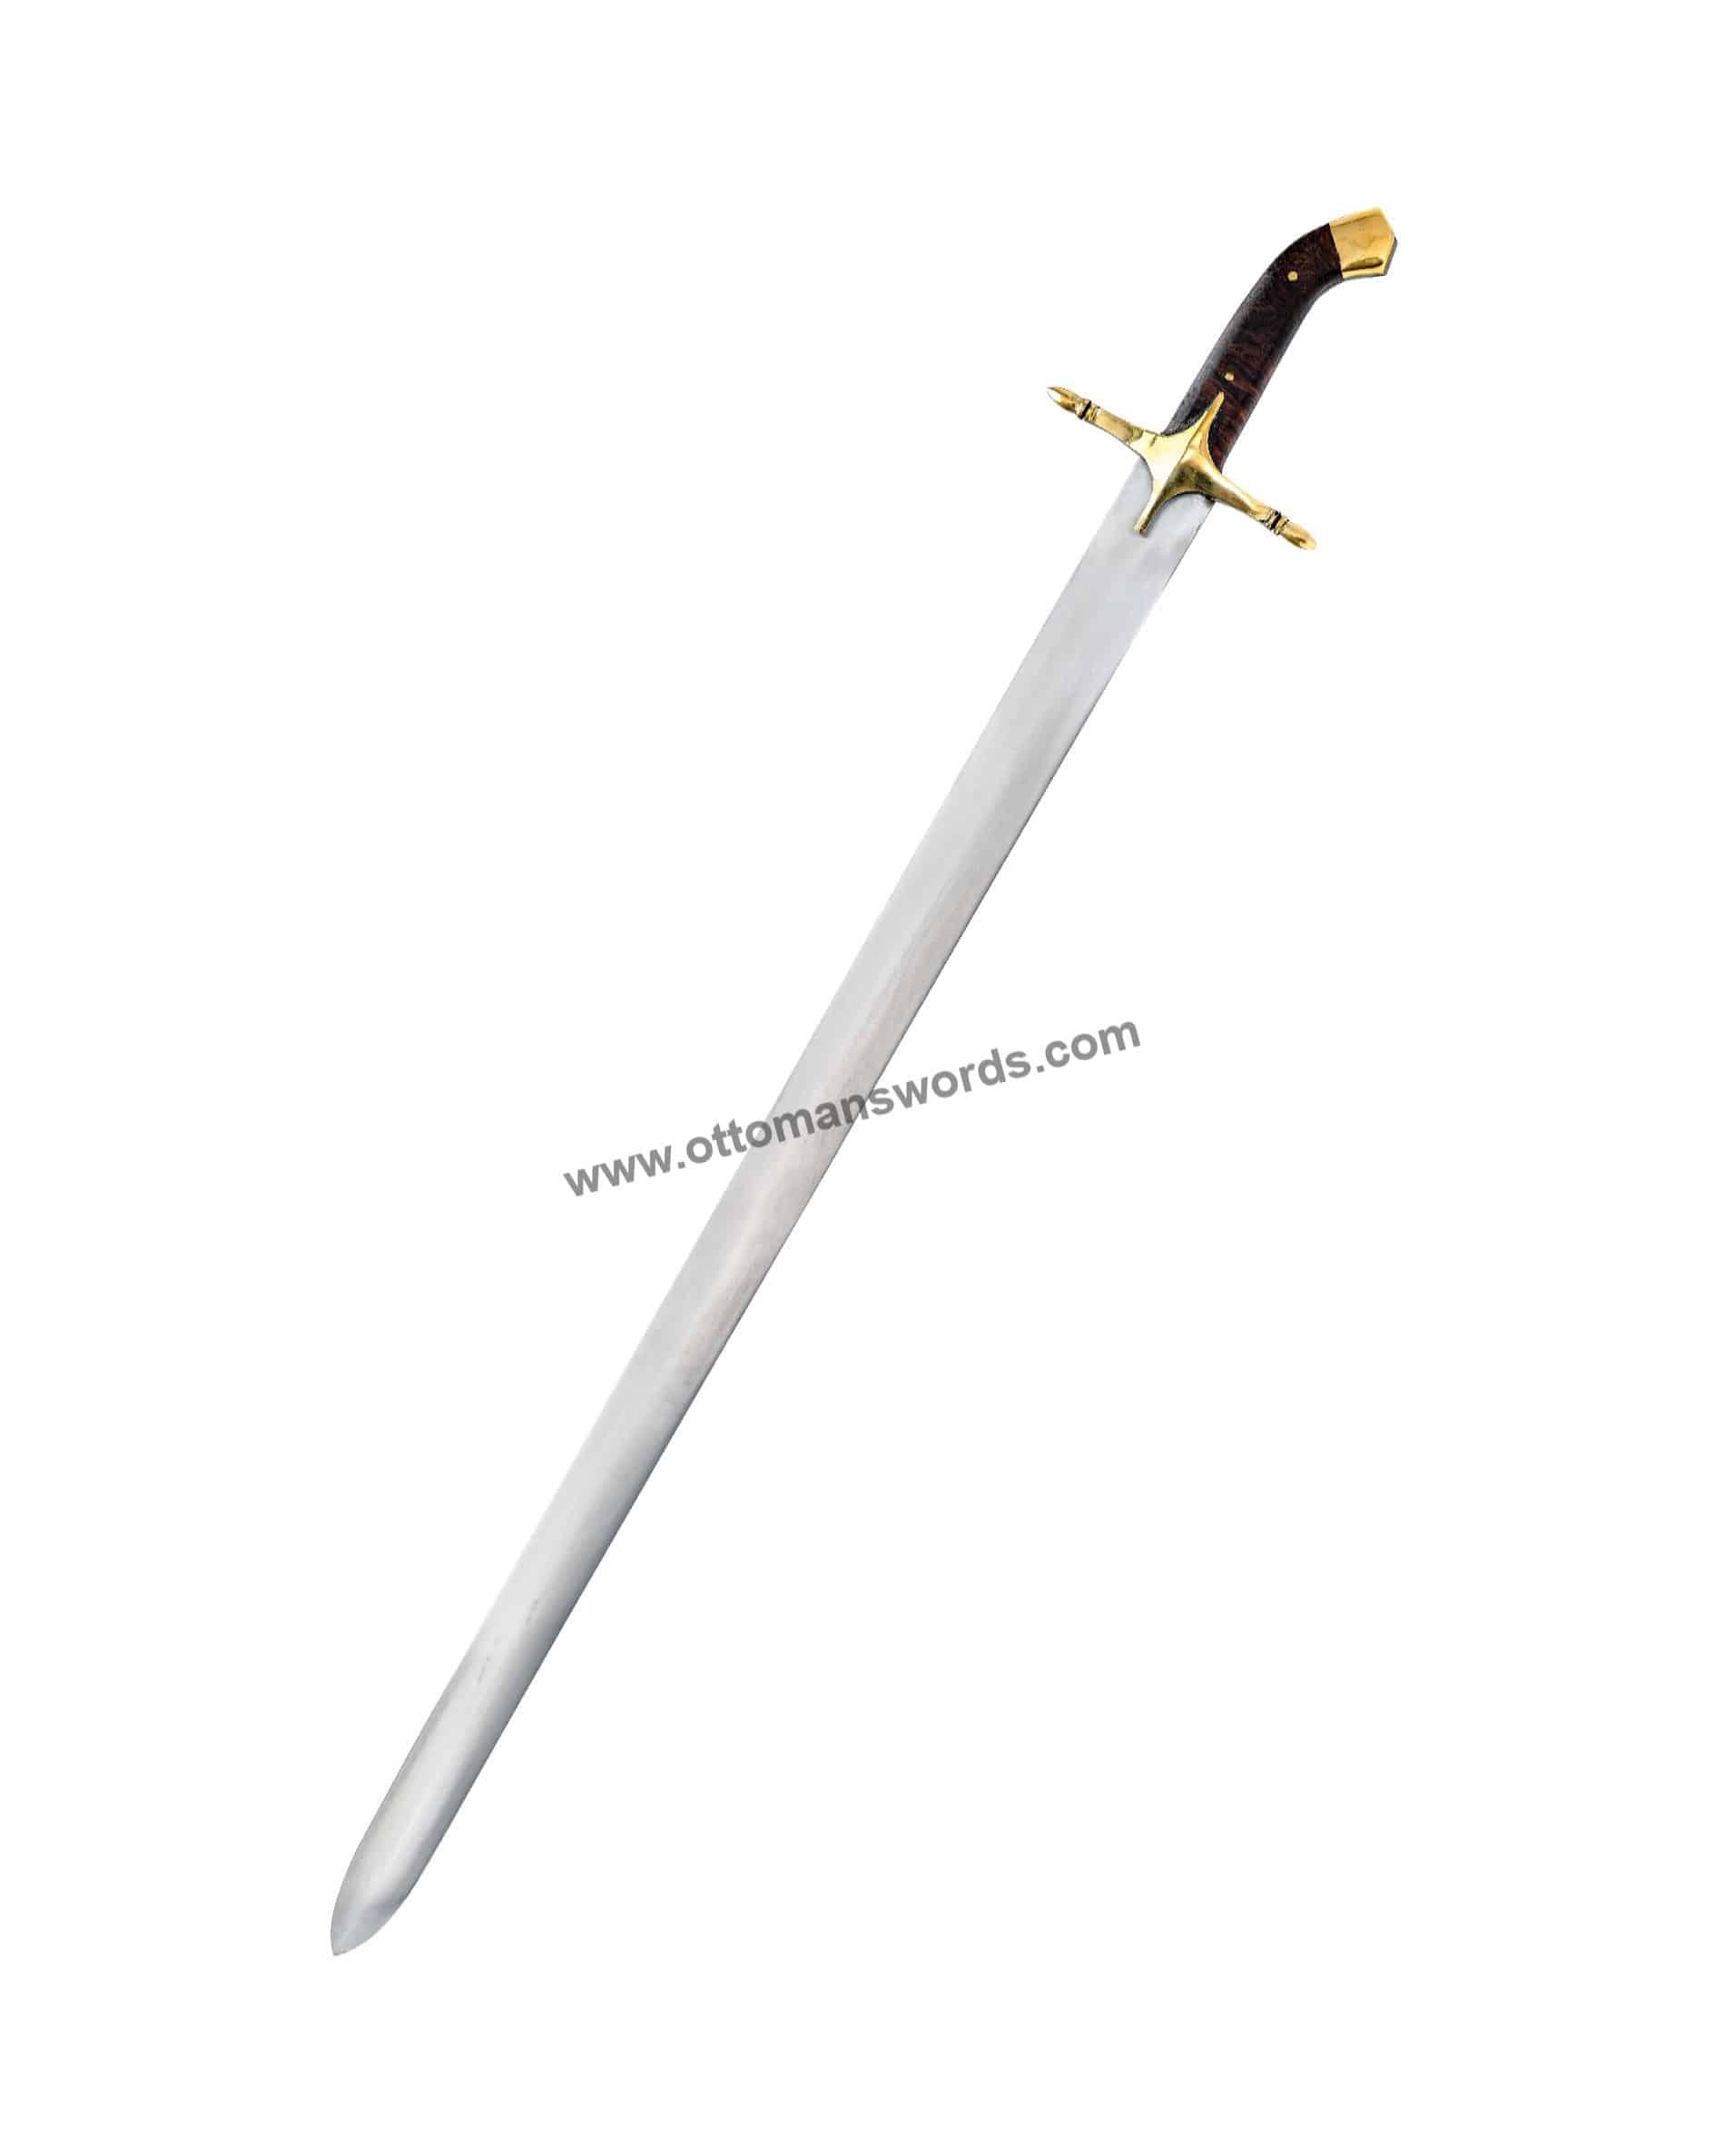 Replica Sword Qadib of prophet muhammad (1)